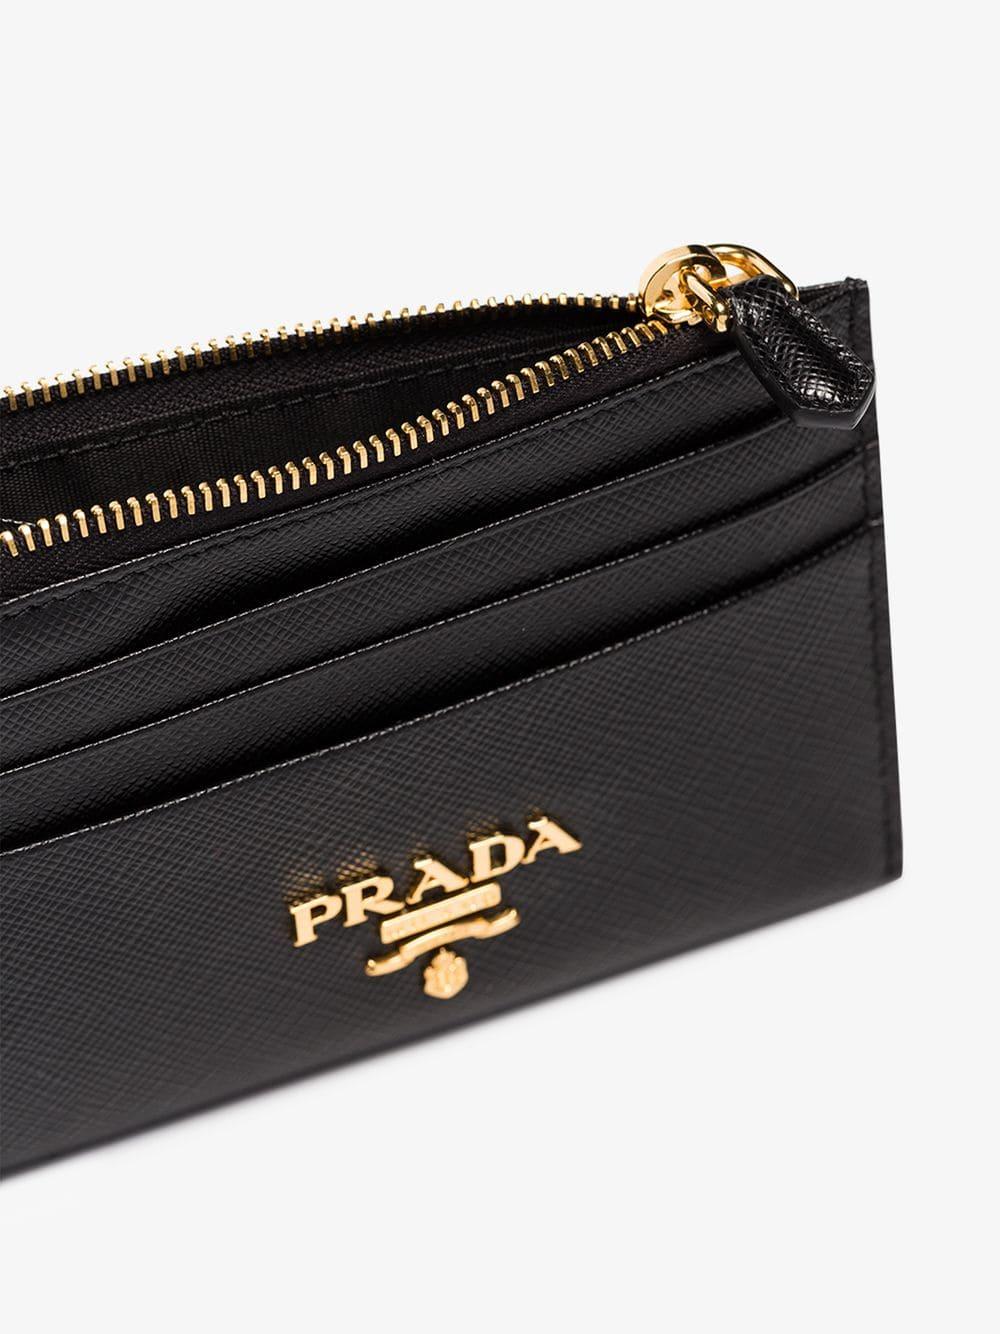 Prada Leather Logo Plaque Cardholder in Black | Lyst